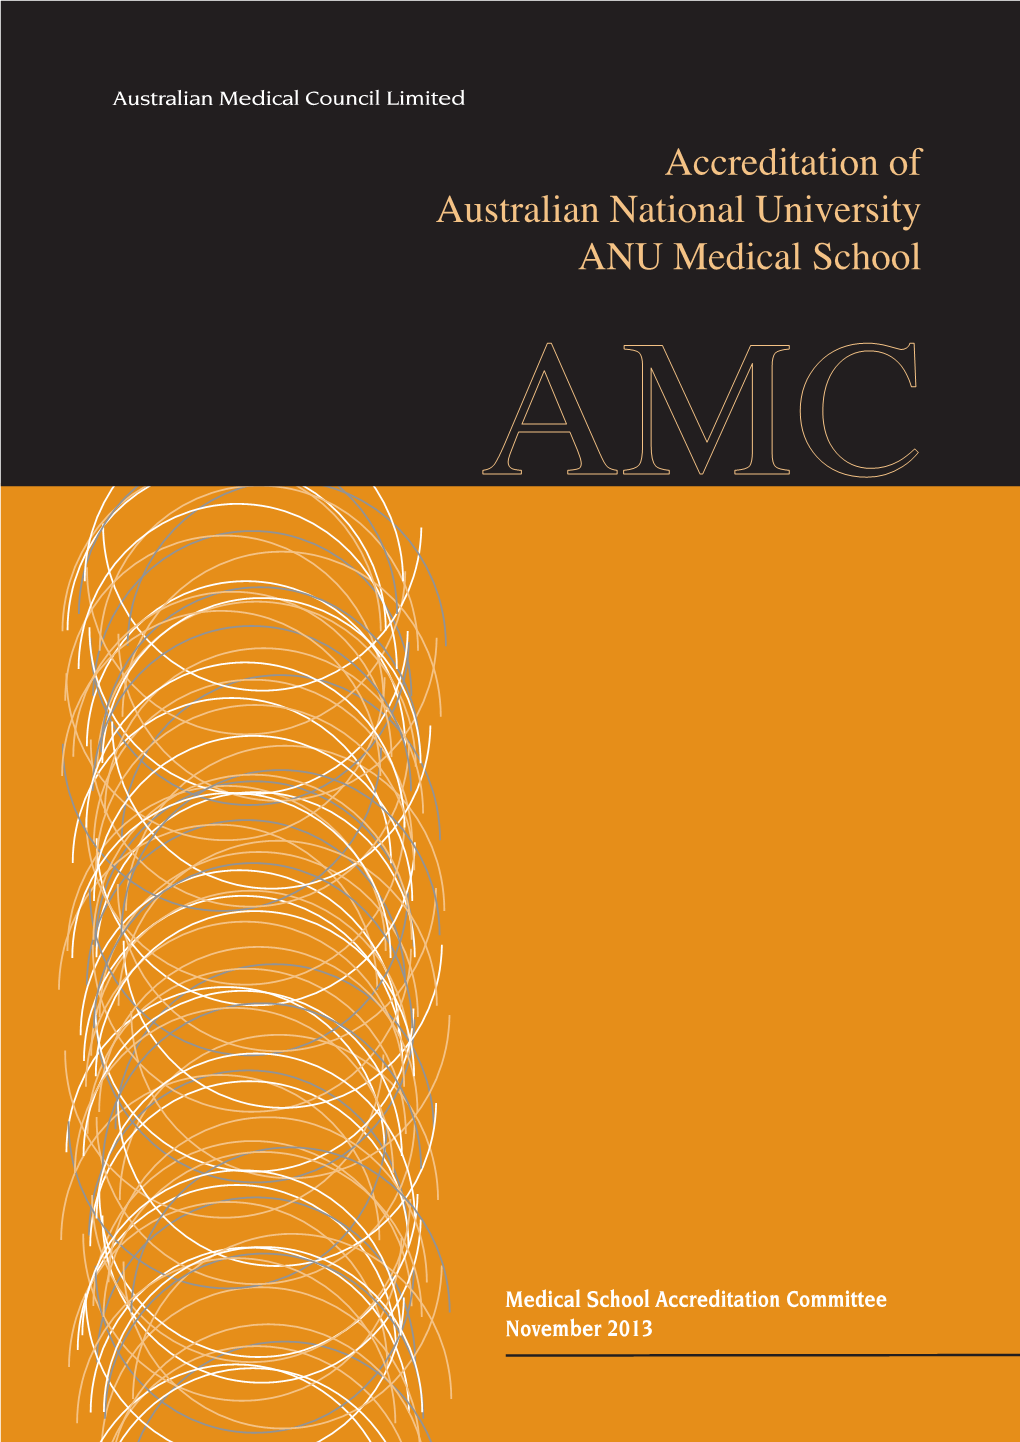 Accreditation of Australian National University ANU Medical School